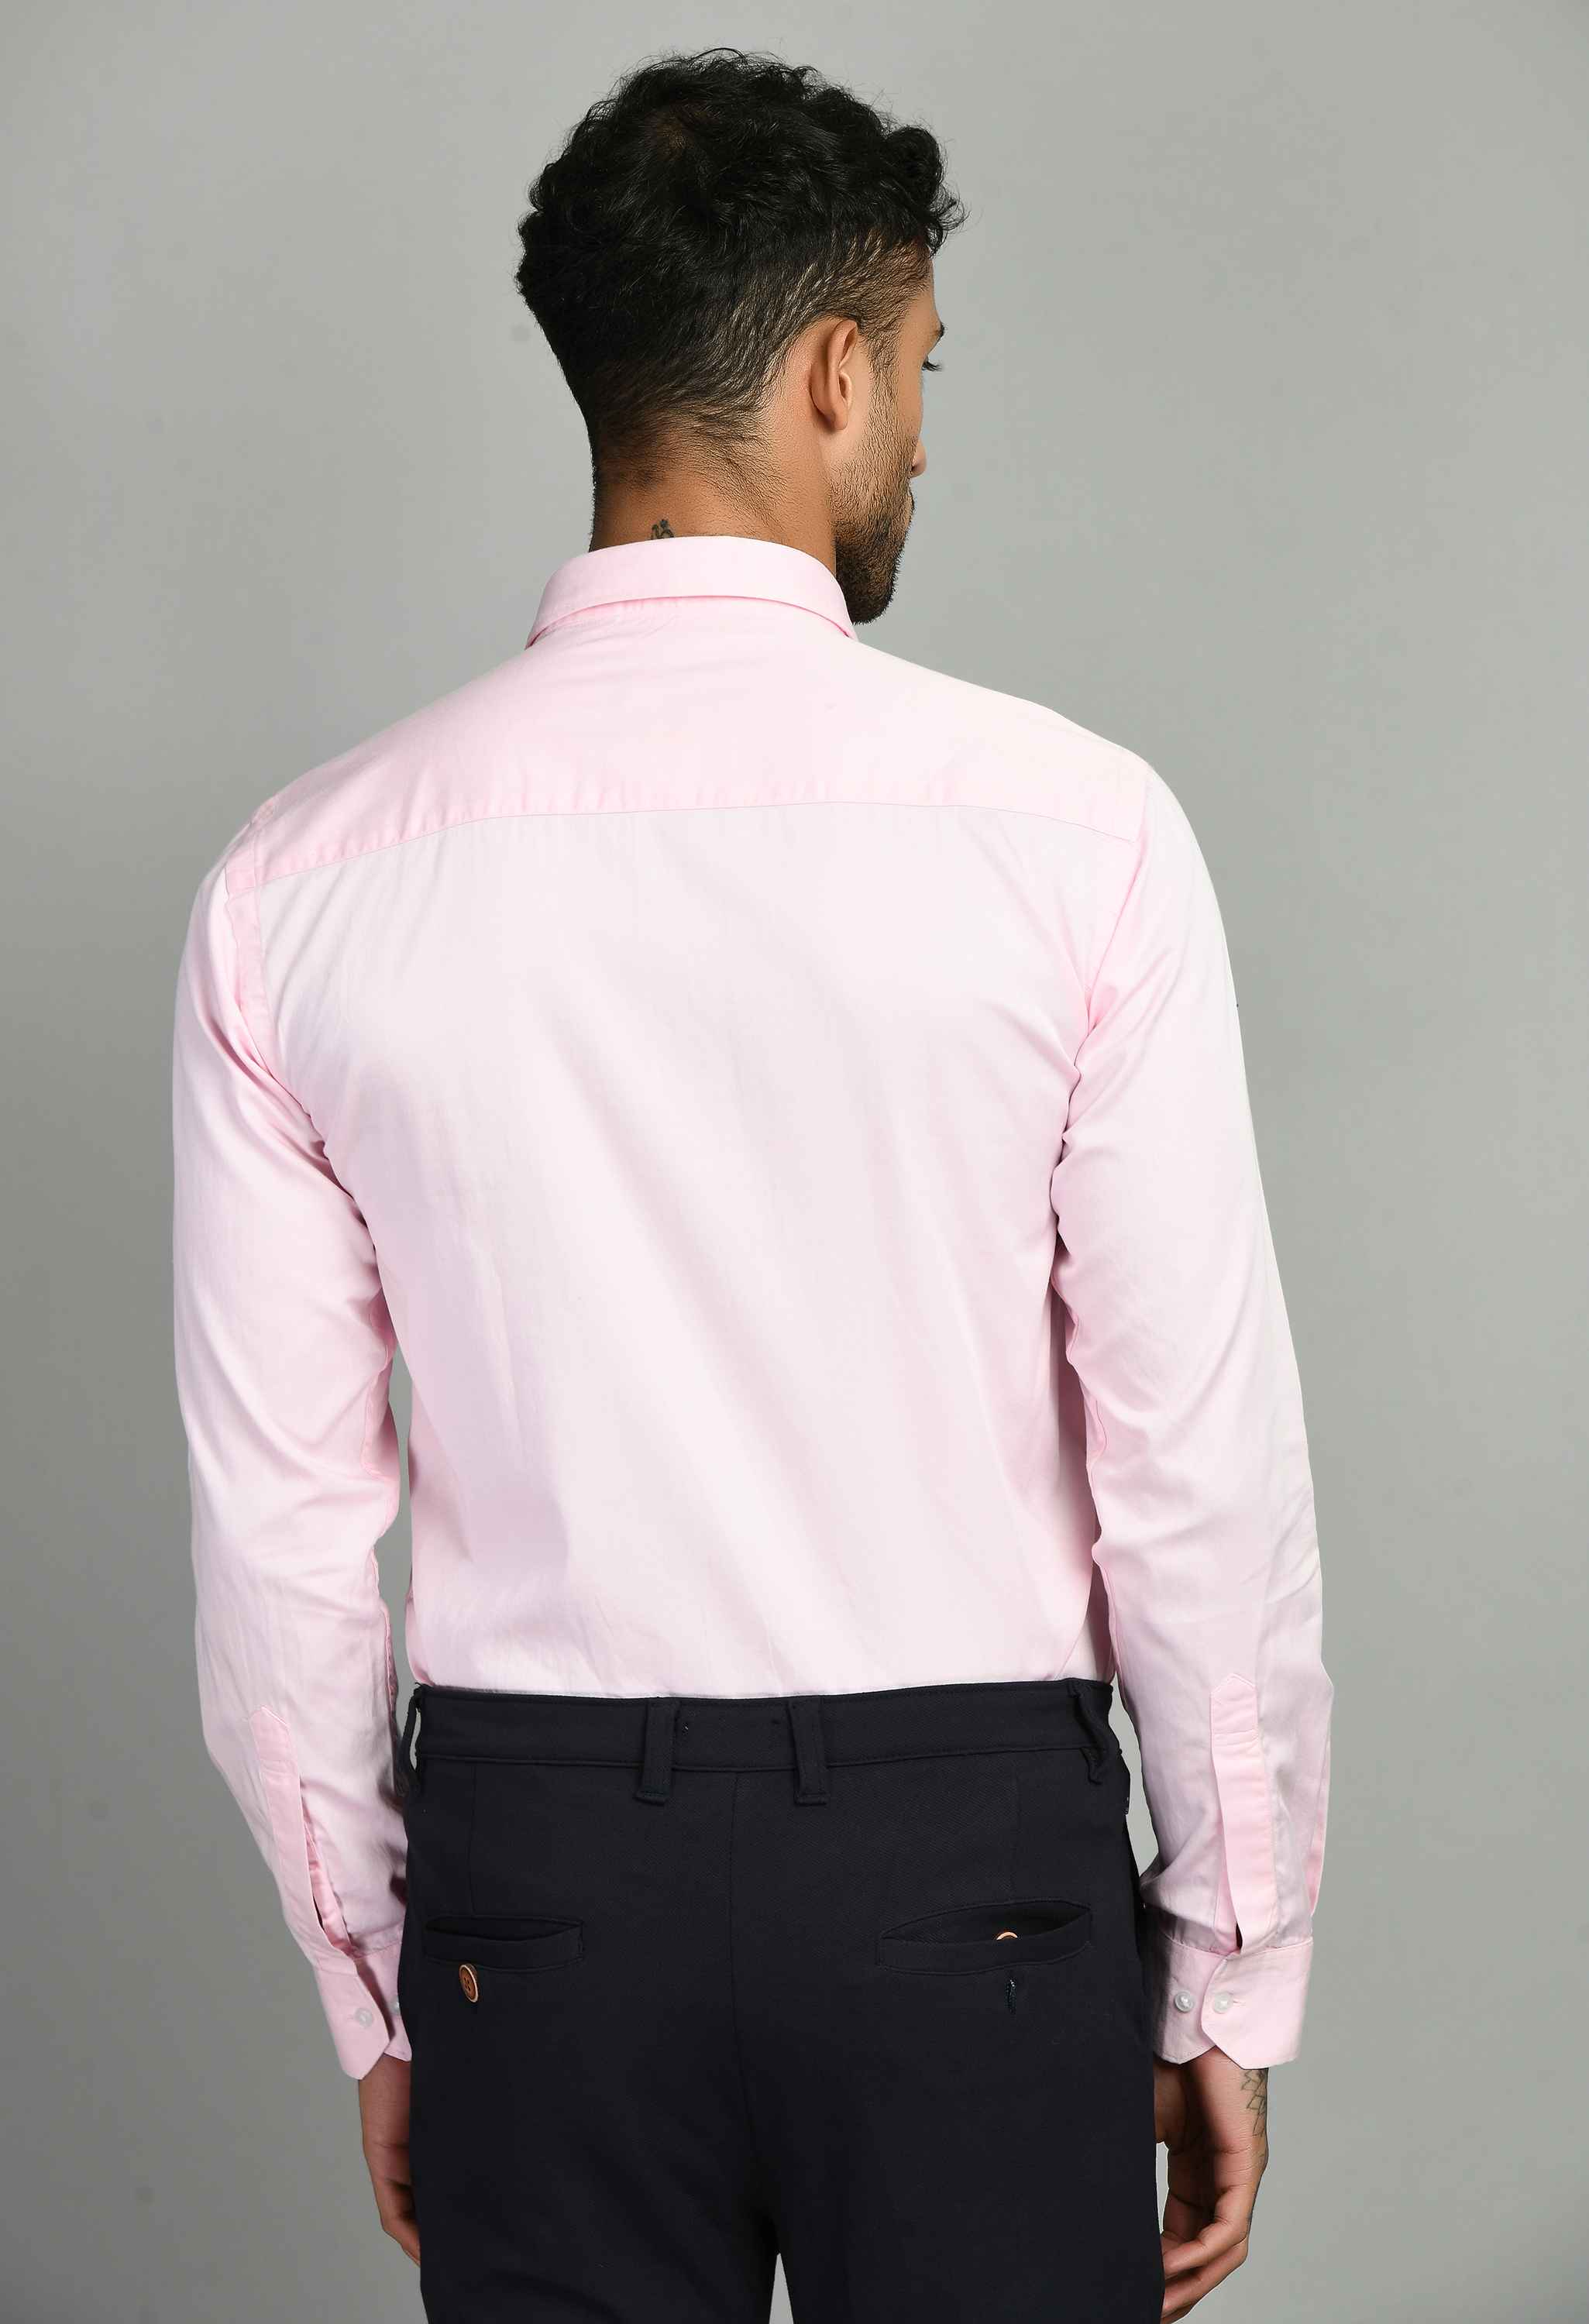 Men's Pink Spread Collar Solid Cotton Formal Shirt